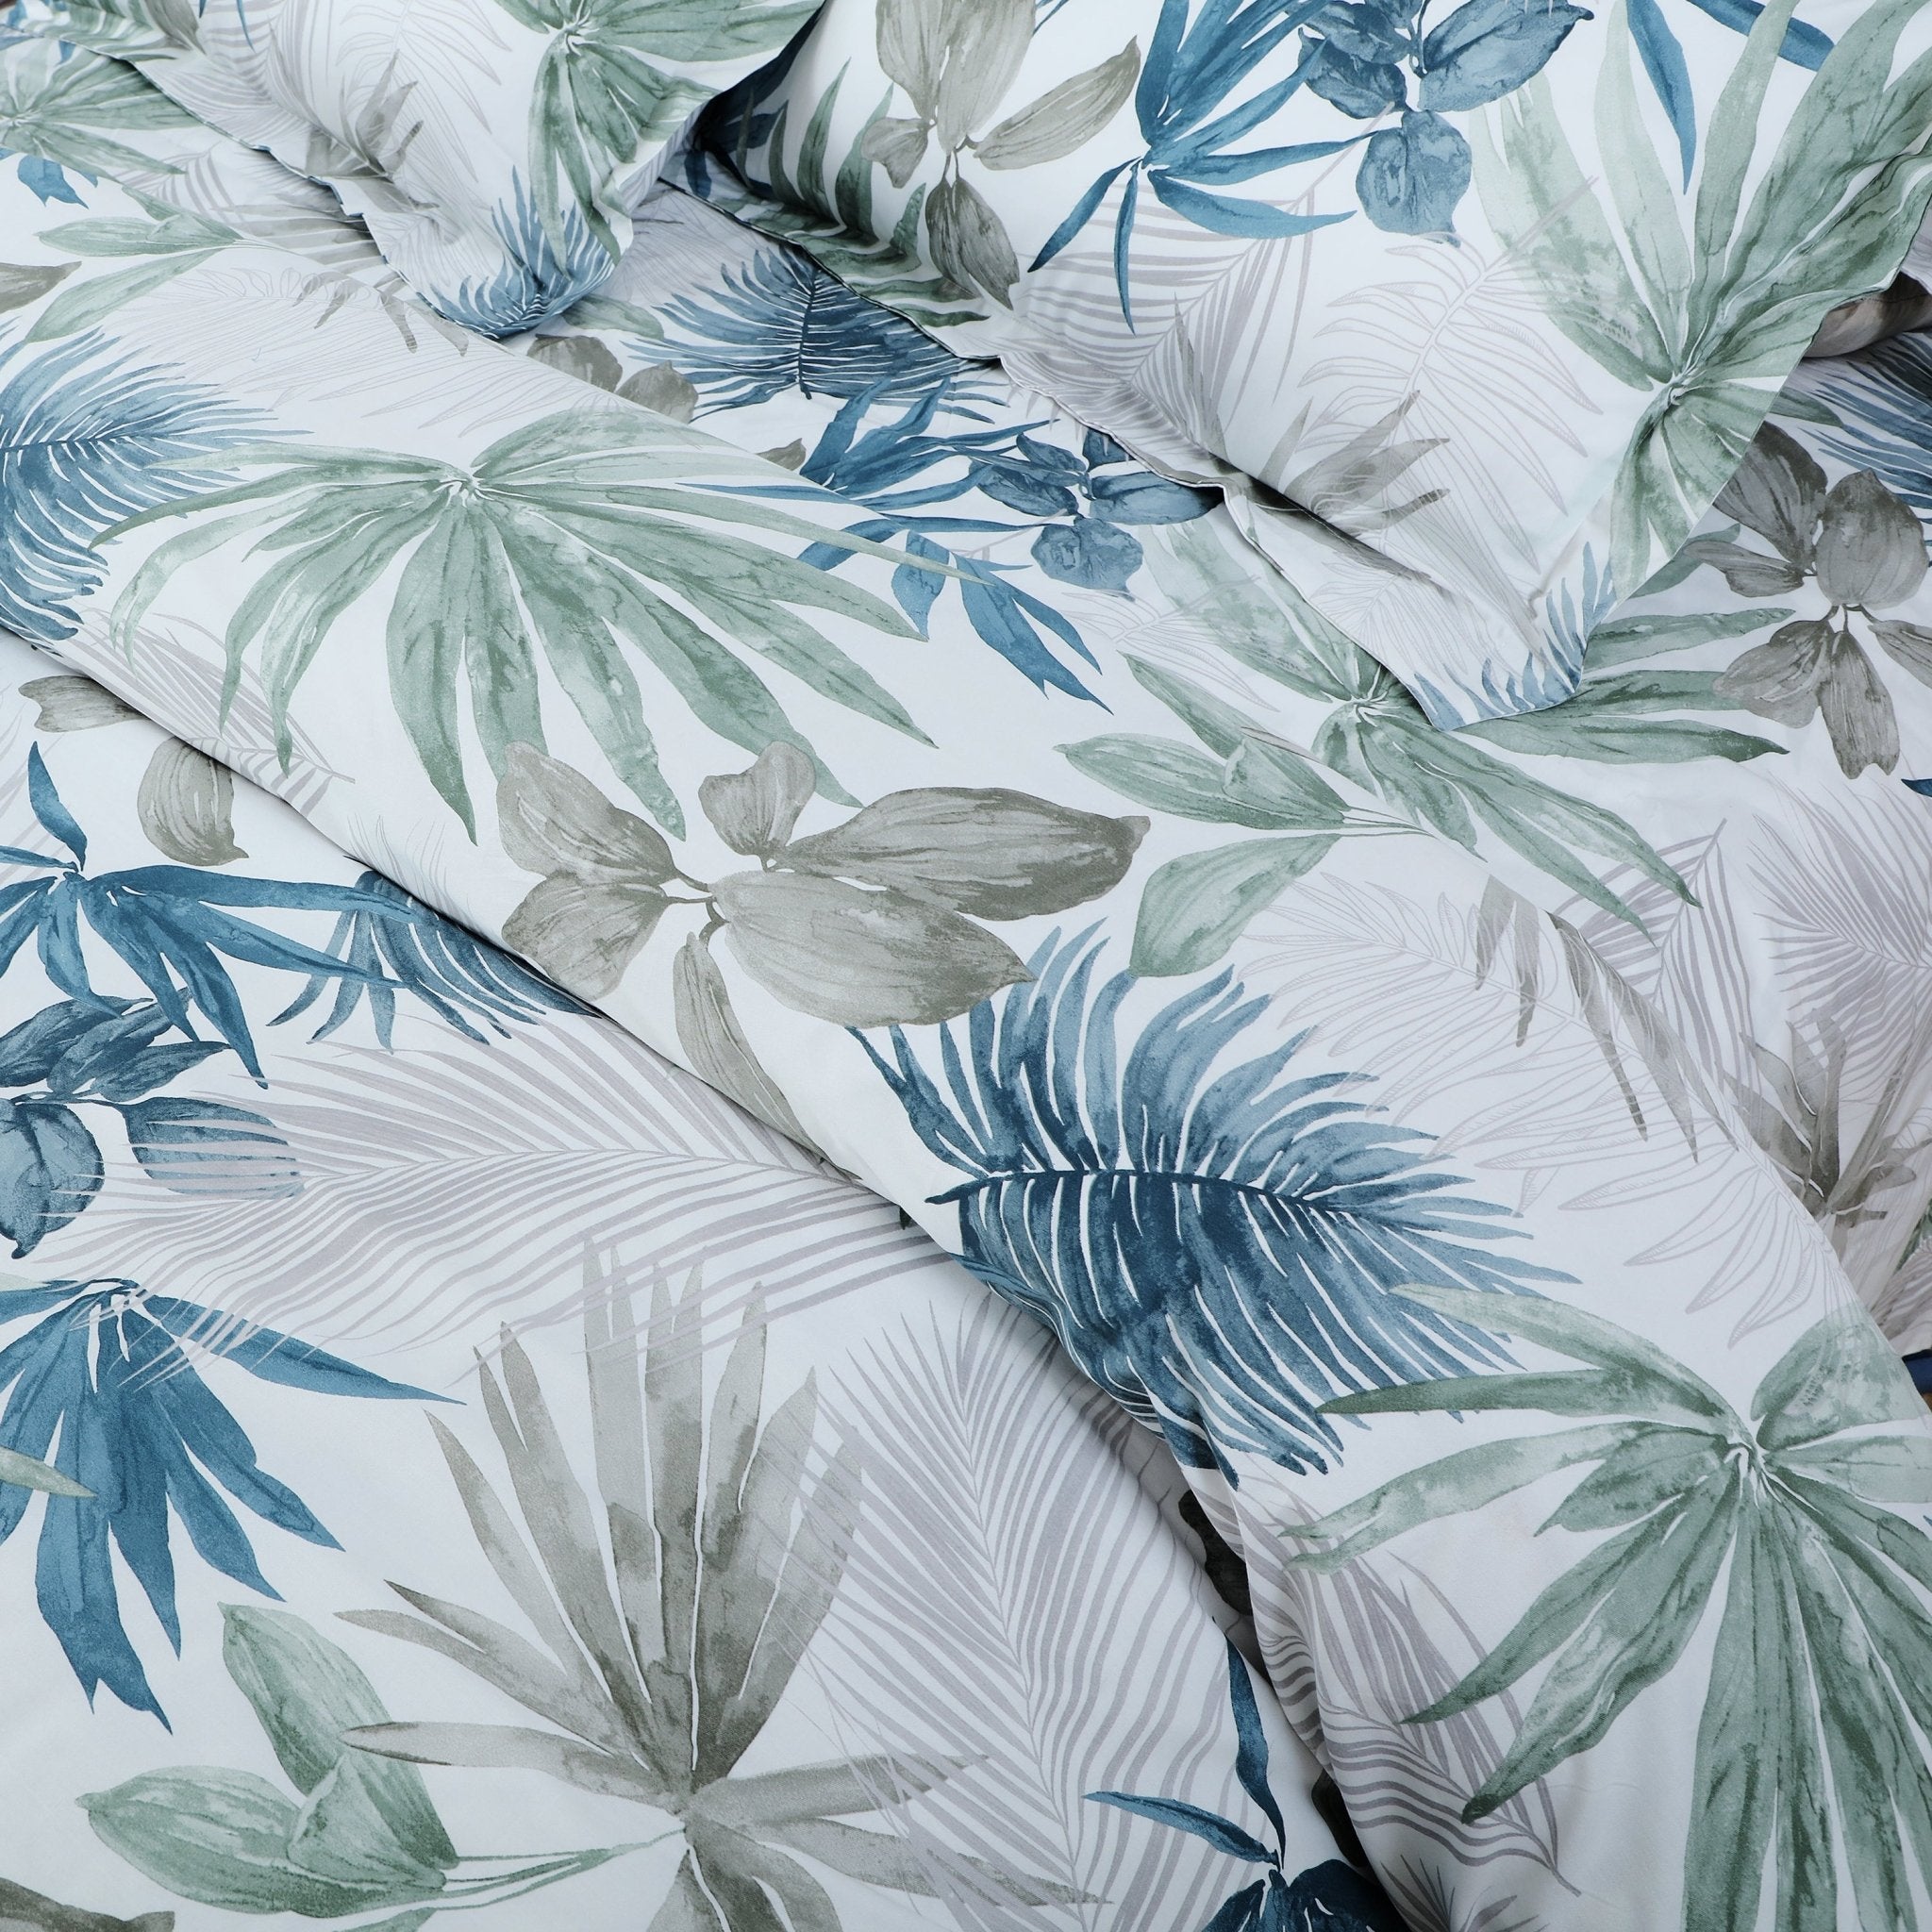 Malako Royale XL White Botanic 100% Cotton King Size 6 Piece Comforter Set - MALAKO